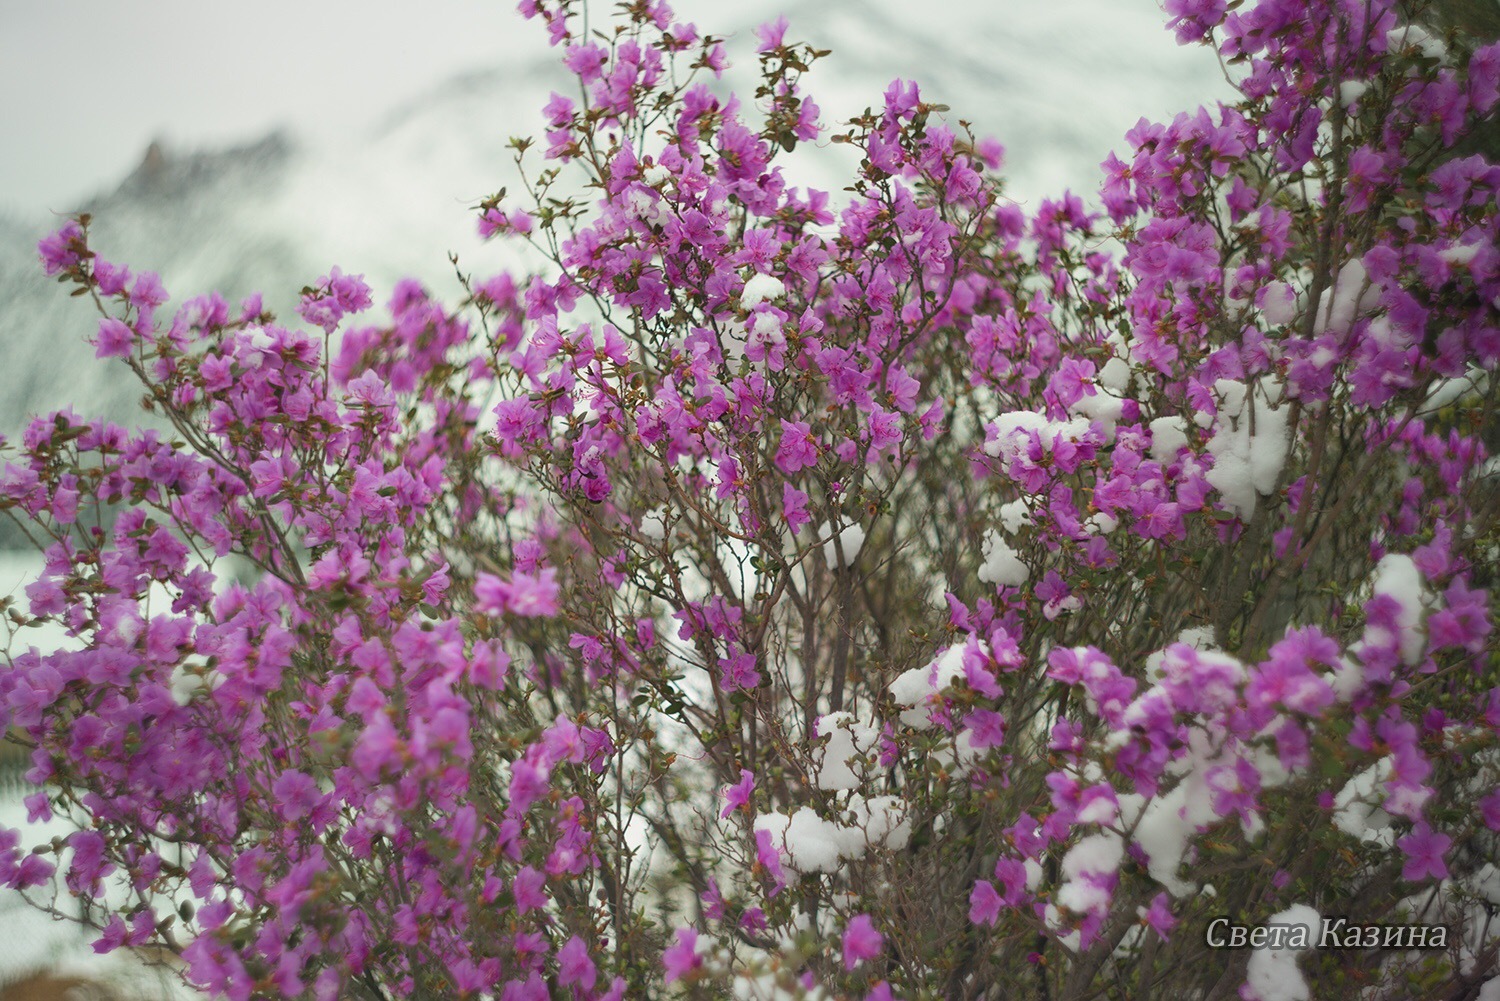 Maral has blossomed in Altai - Altai, Mountain Altai, The photo, Maralnik, Longpost, Altai Republic